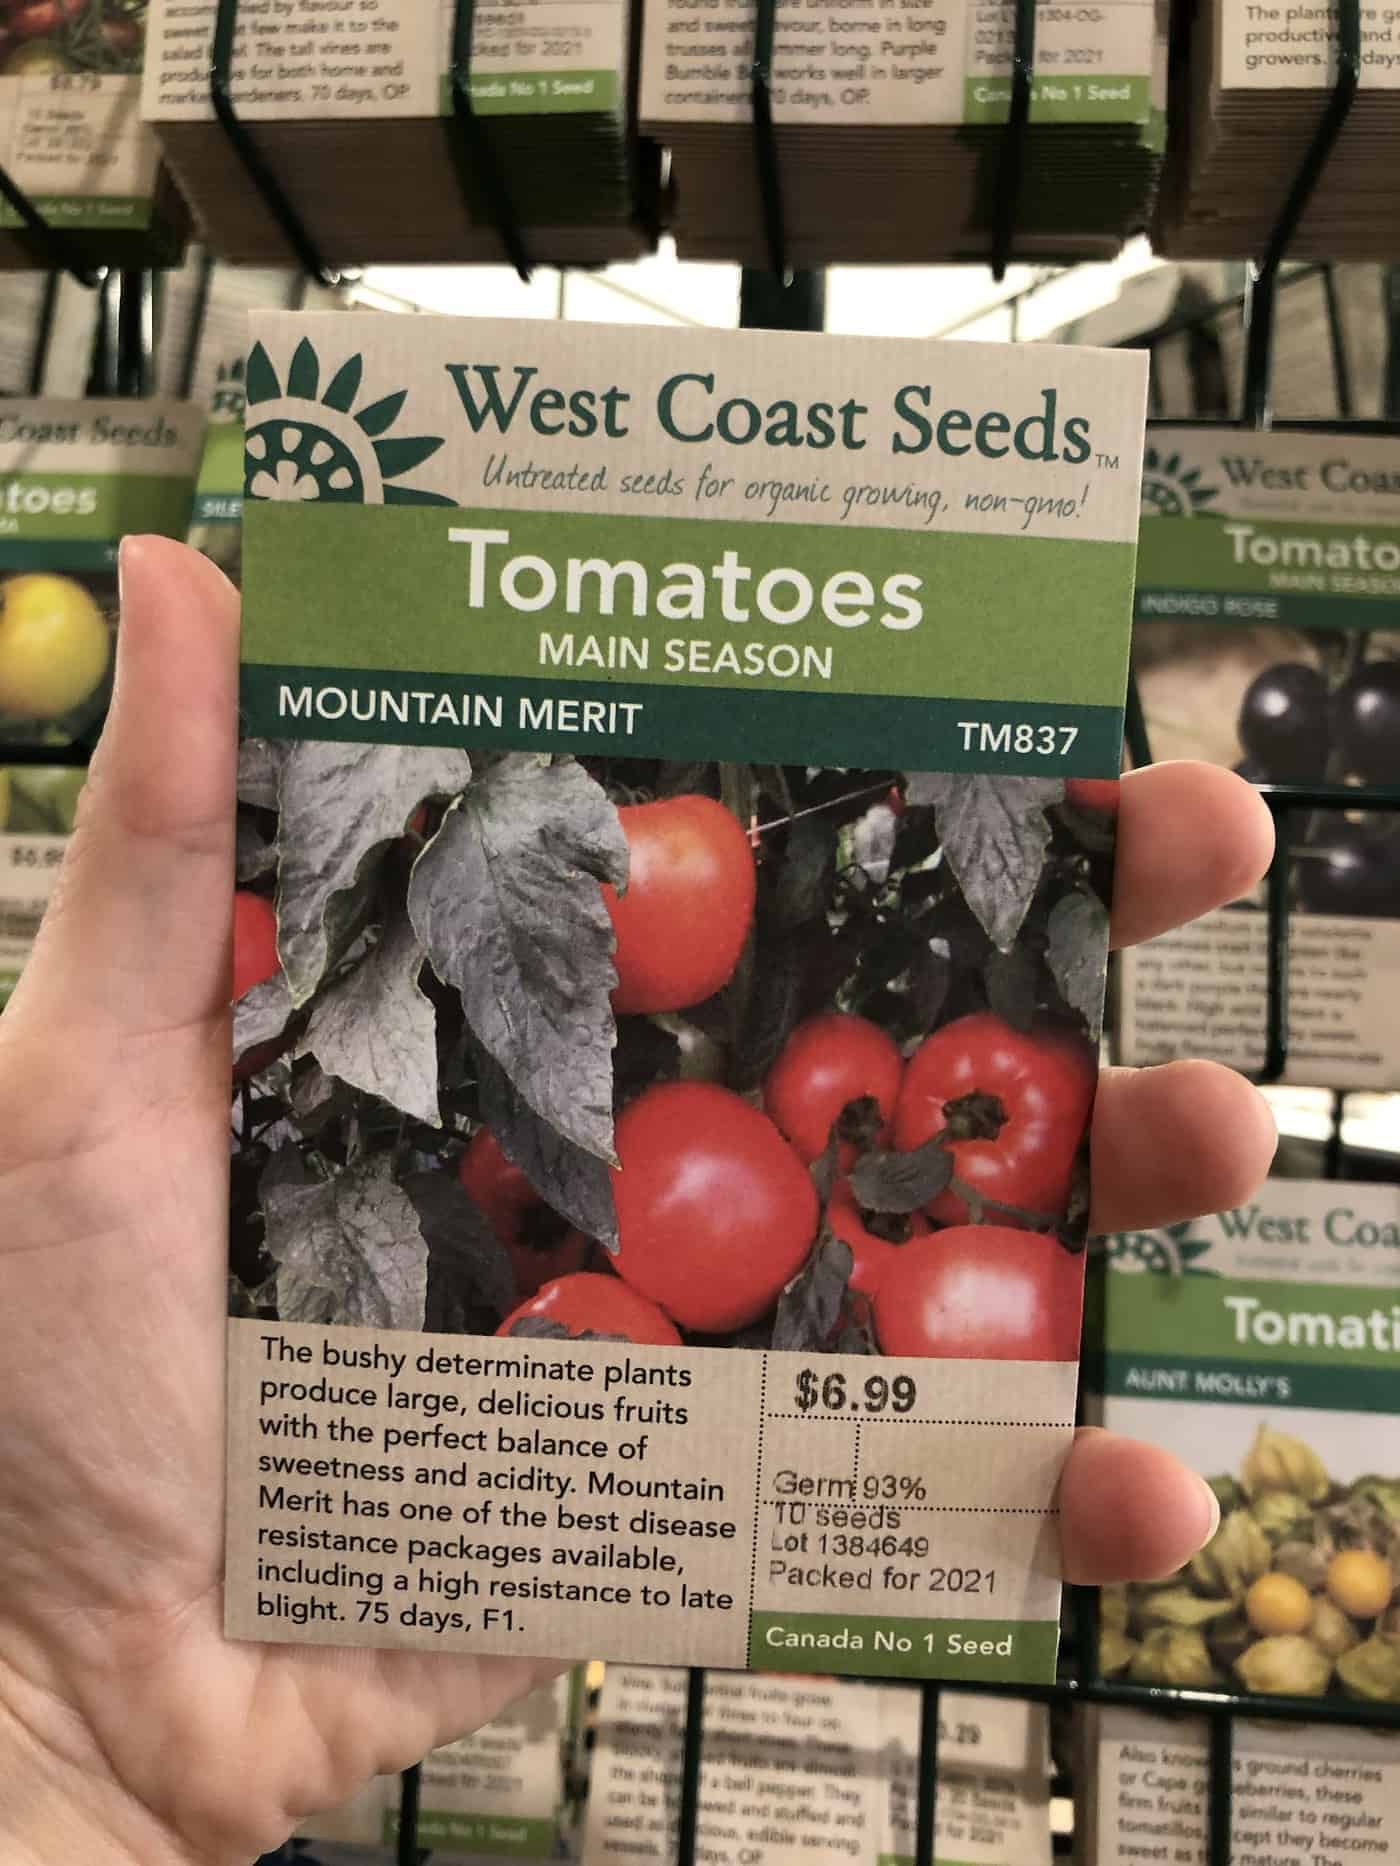 Mountain merit determinate large tomato seeds